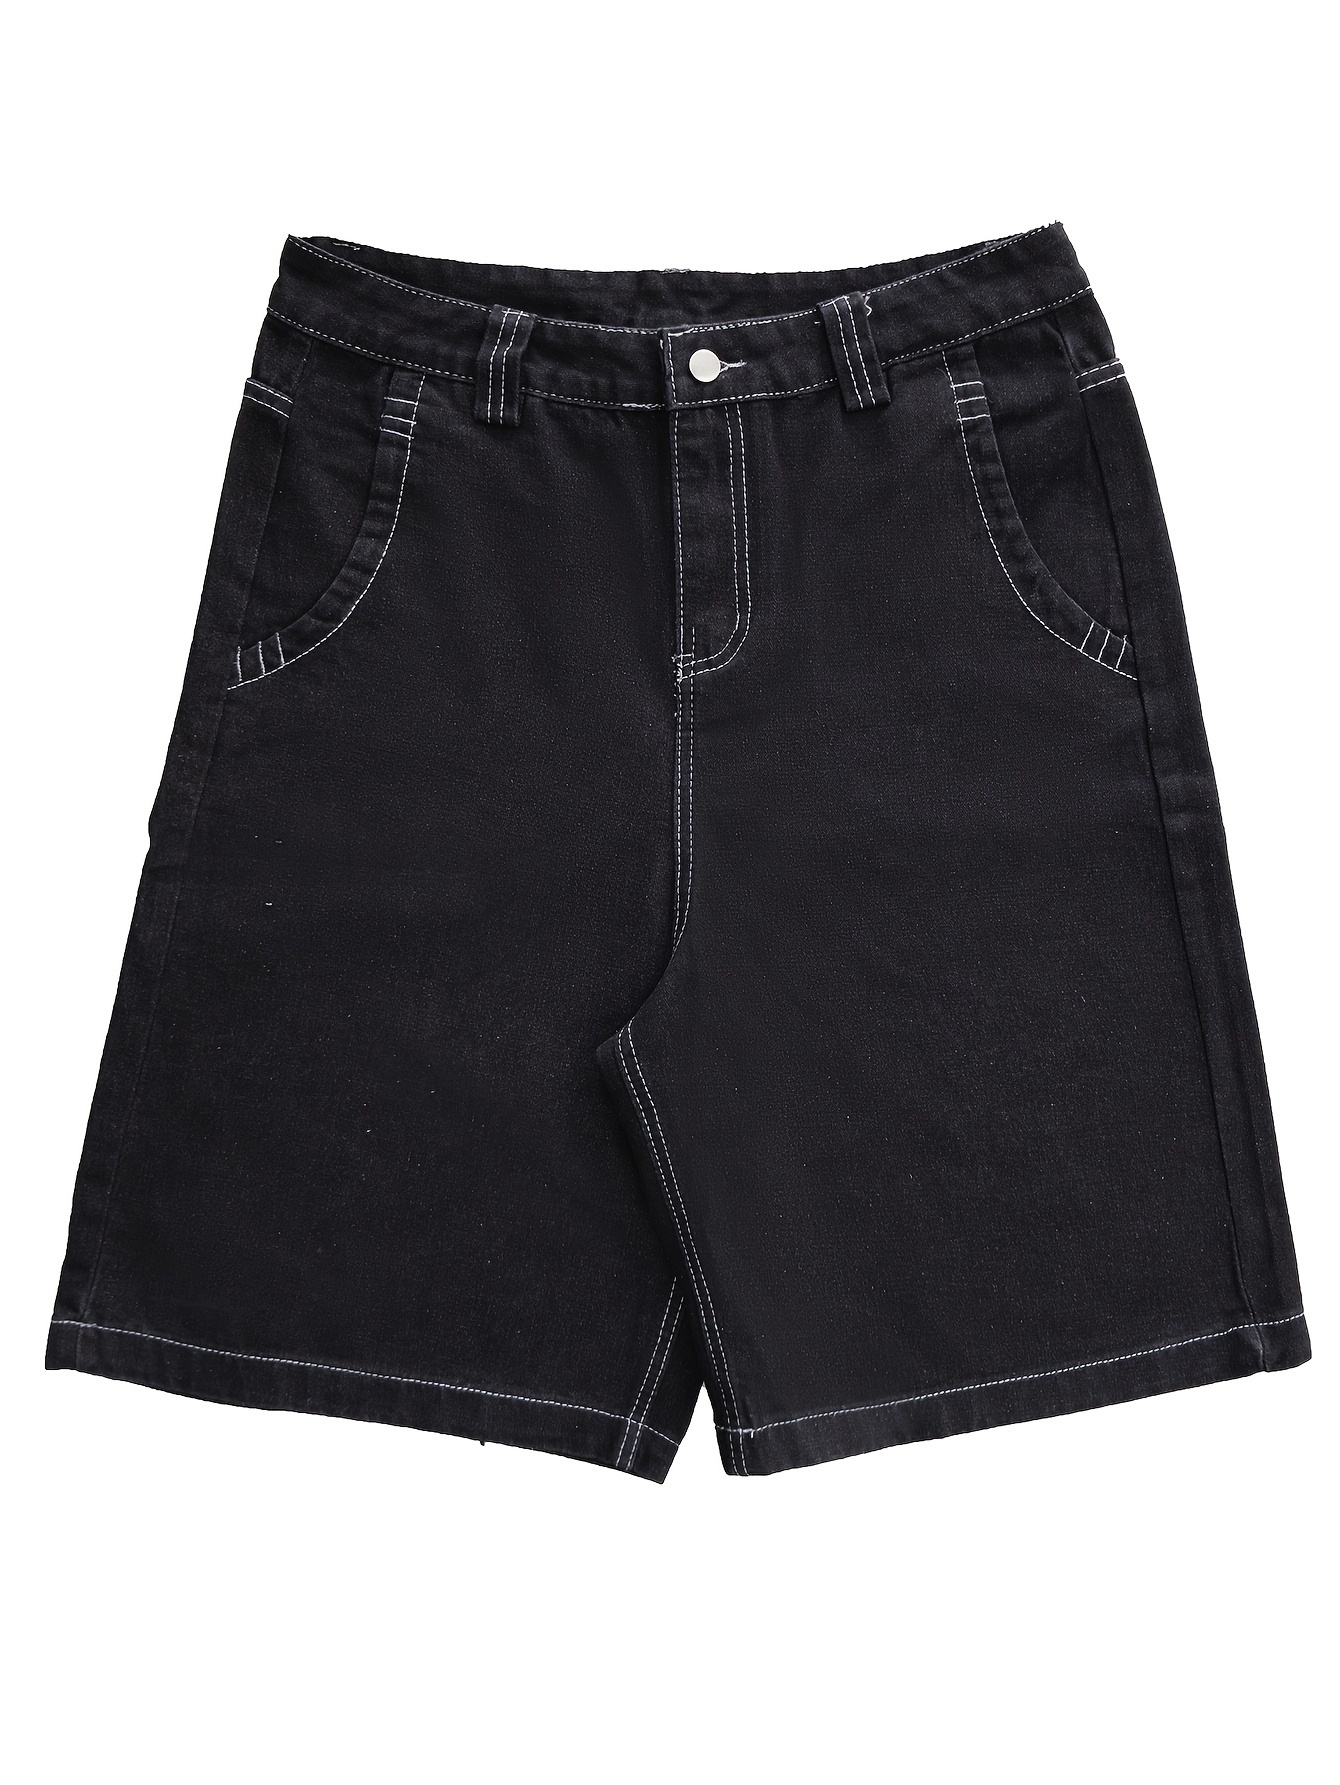 Men's Tooling Casual Shorts Pocket Trendy Youth Casual Short Pants